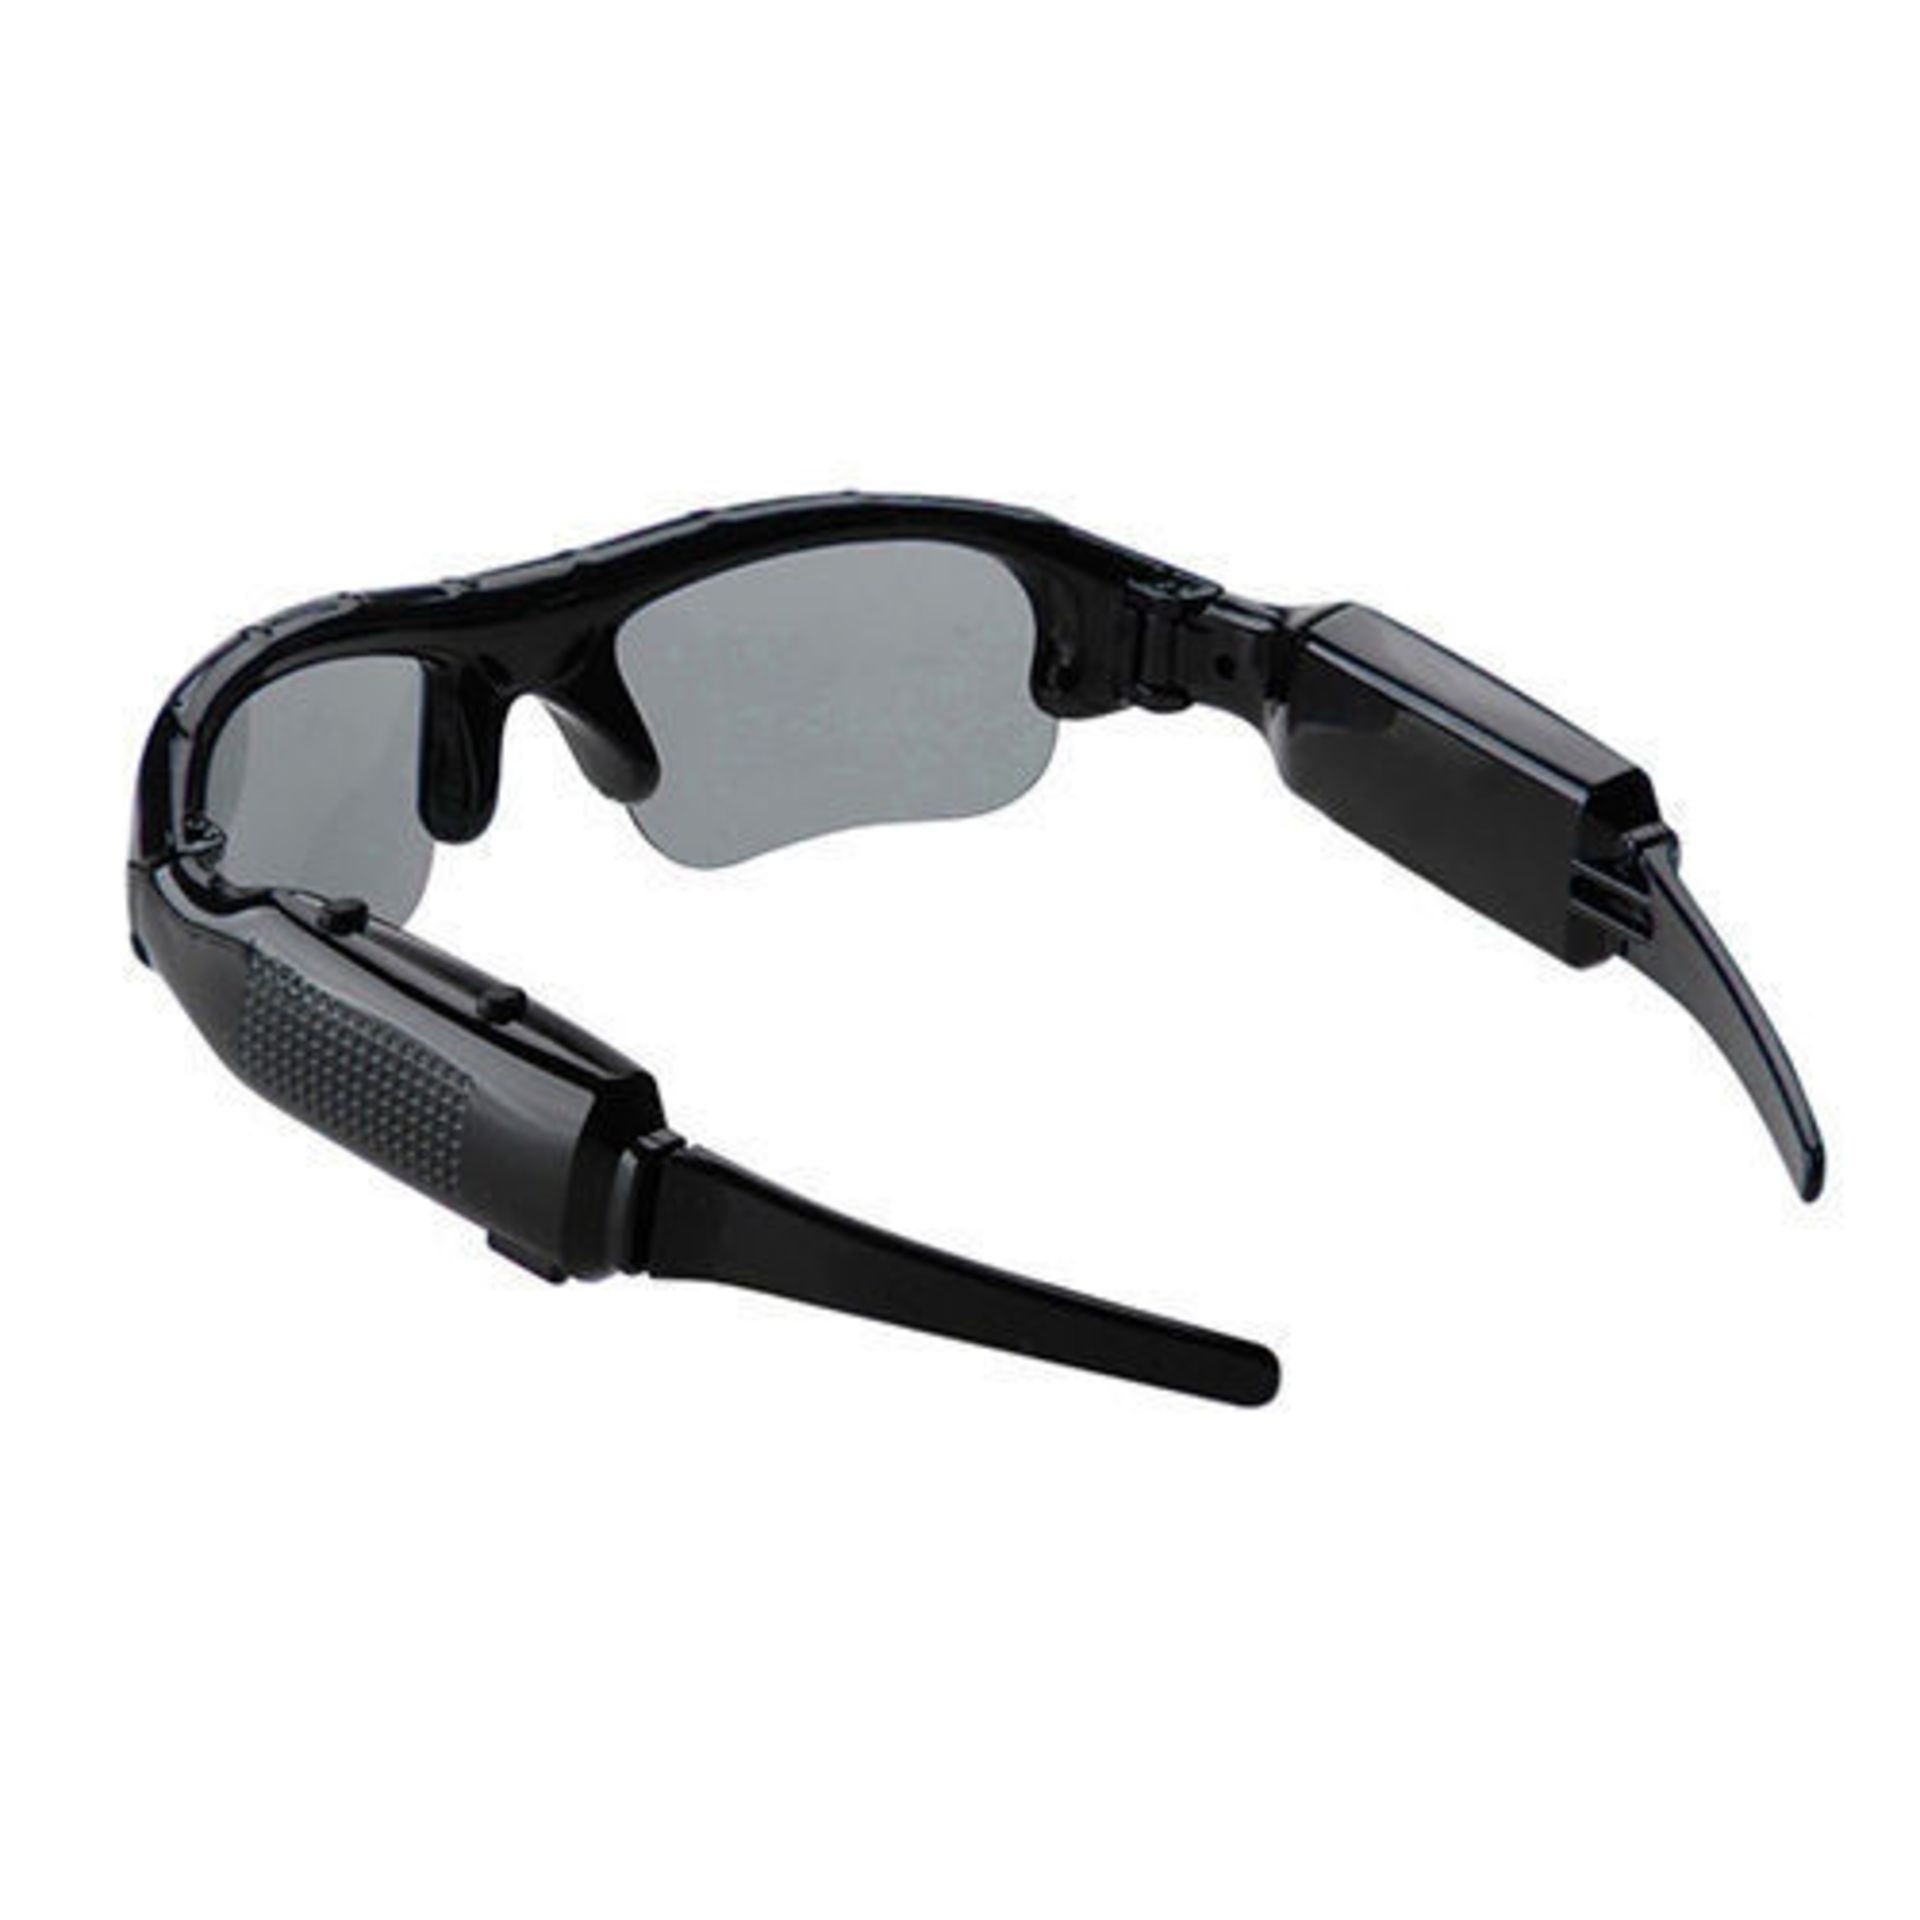 V Brand New Adventure Pro HD Video & Sound Recording Sunglasses Action Cam ISP £29.99 (Ebay) - Image 2 of 3